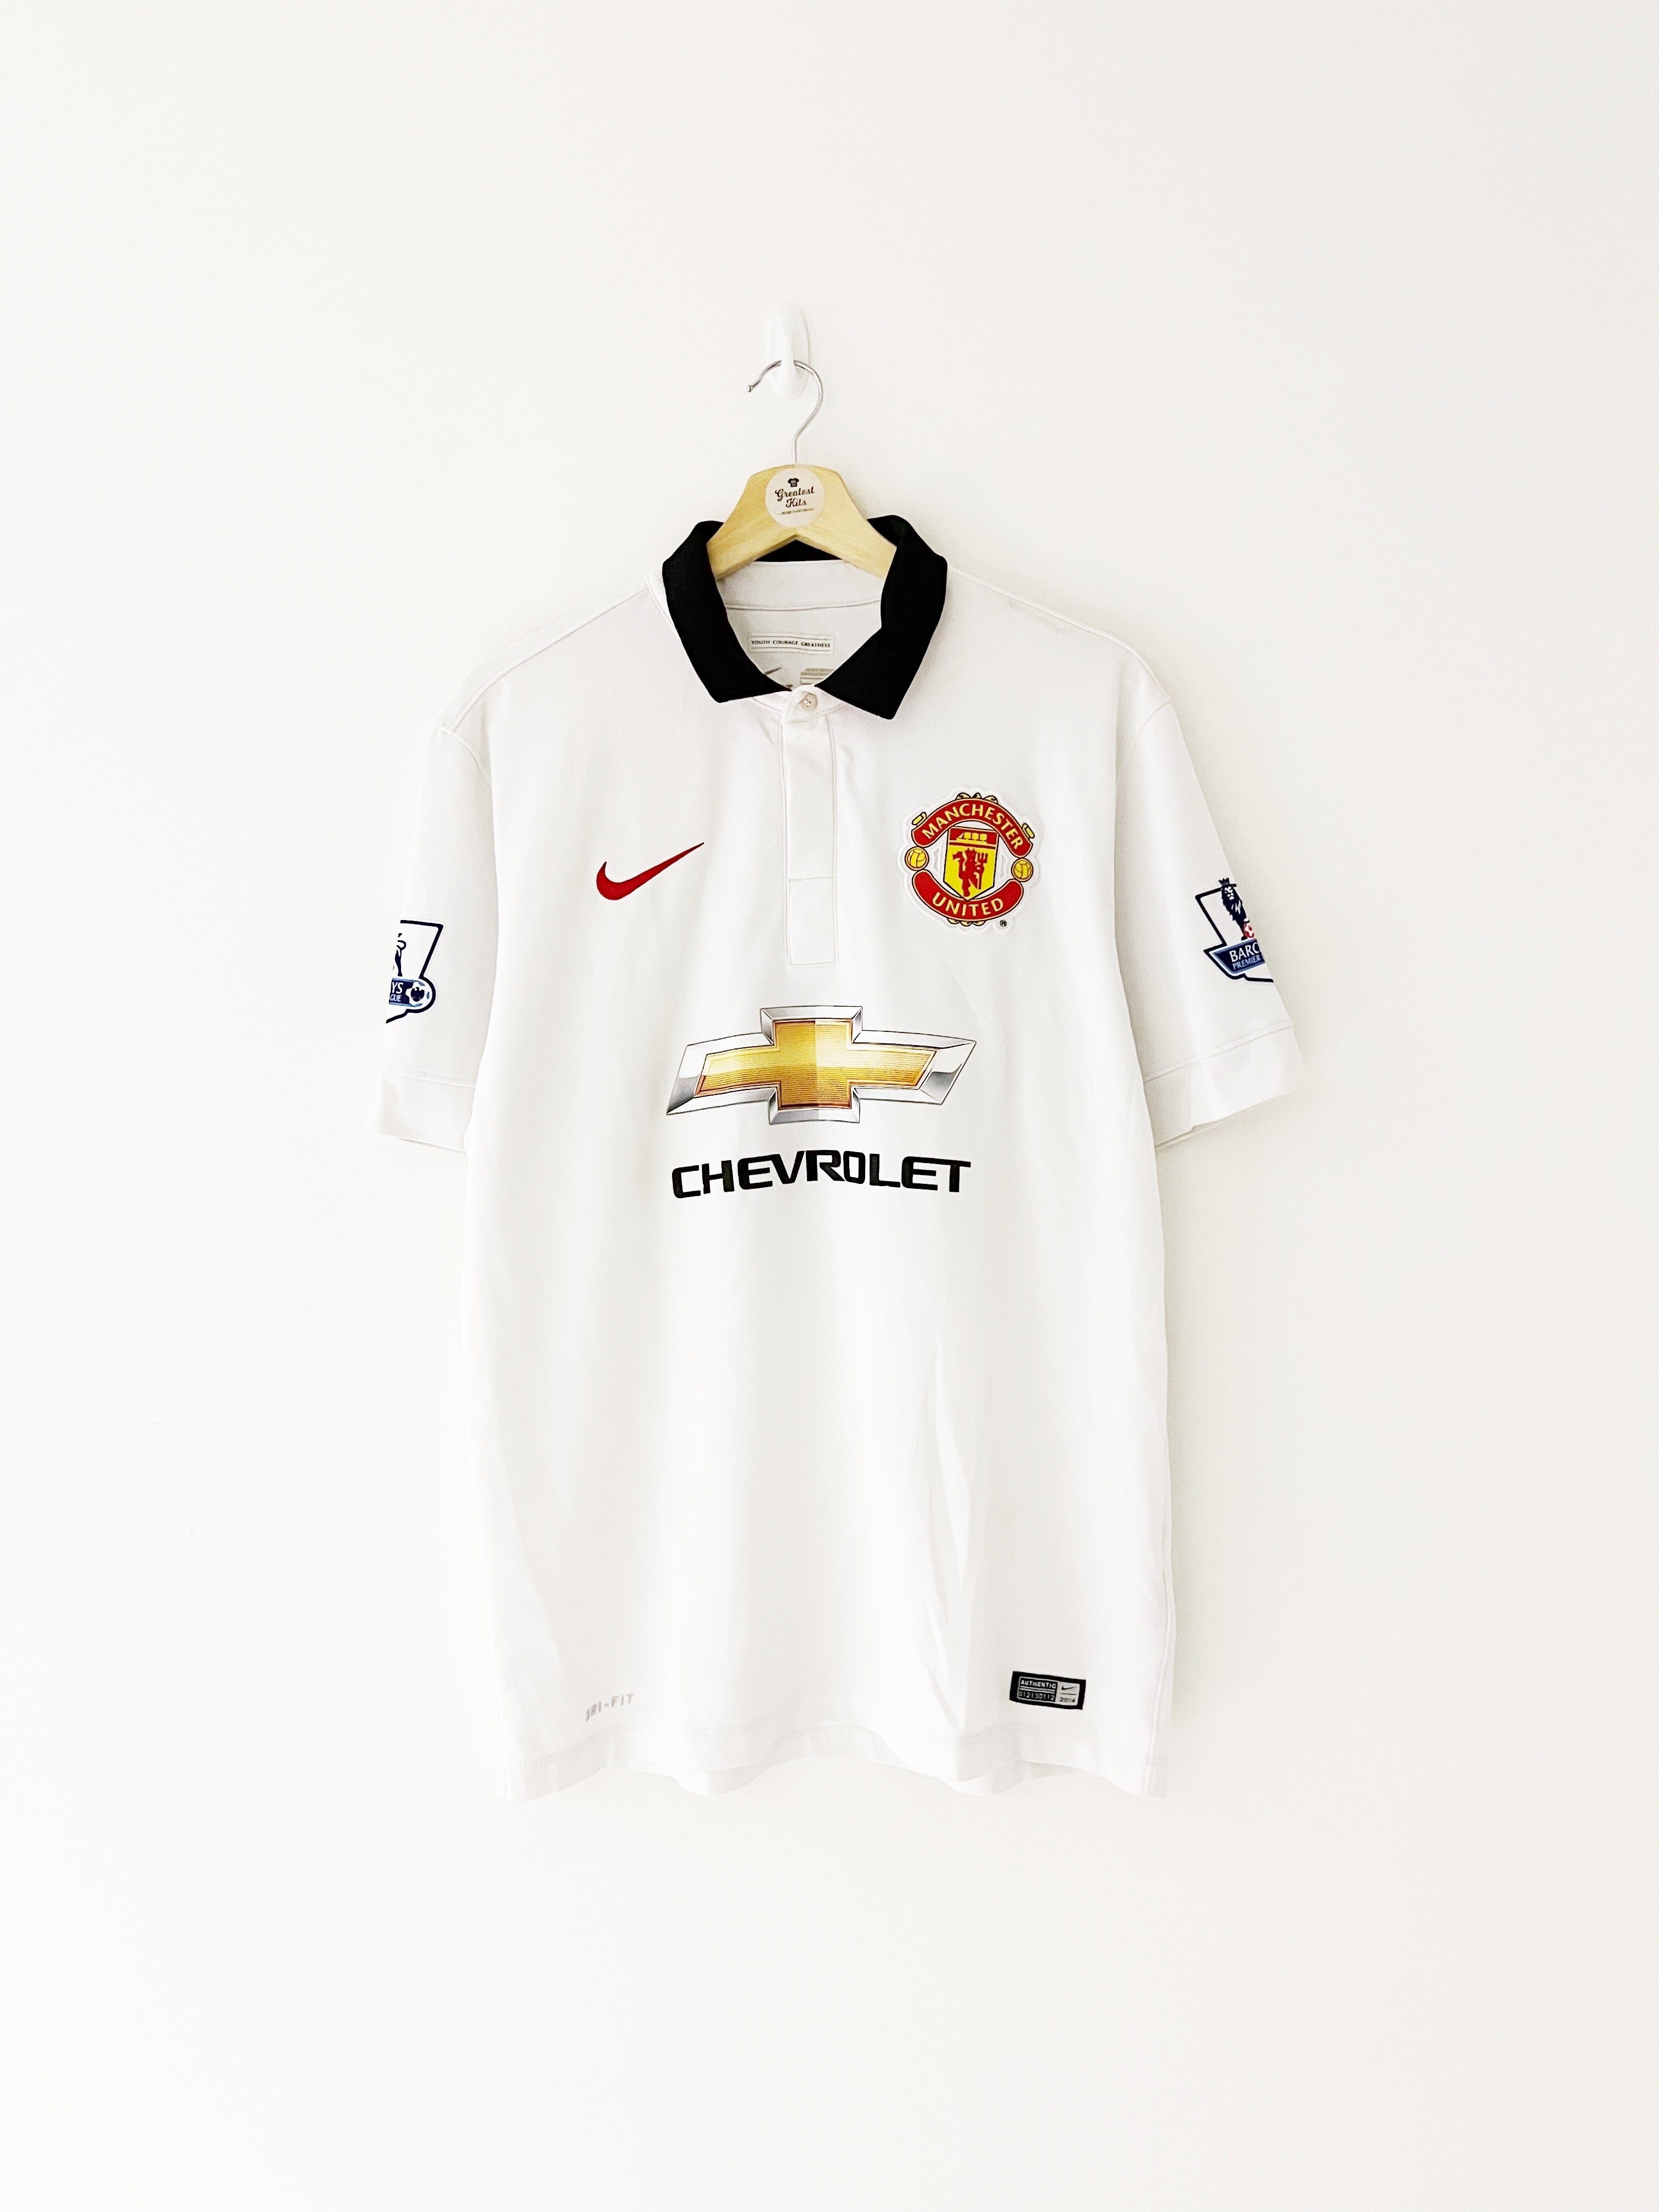 2014/15 Manchester United Away Shirt Di Maria #7 (L) 9/10